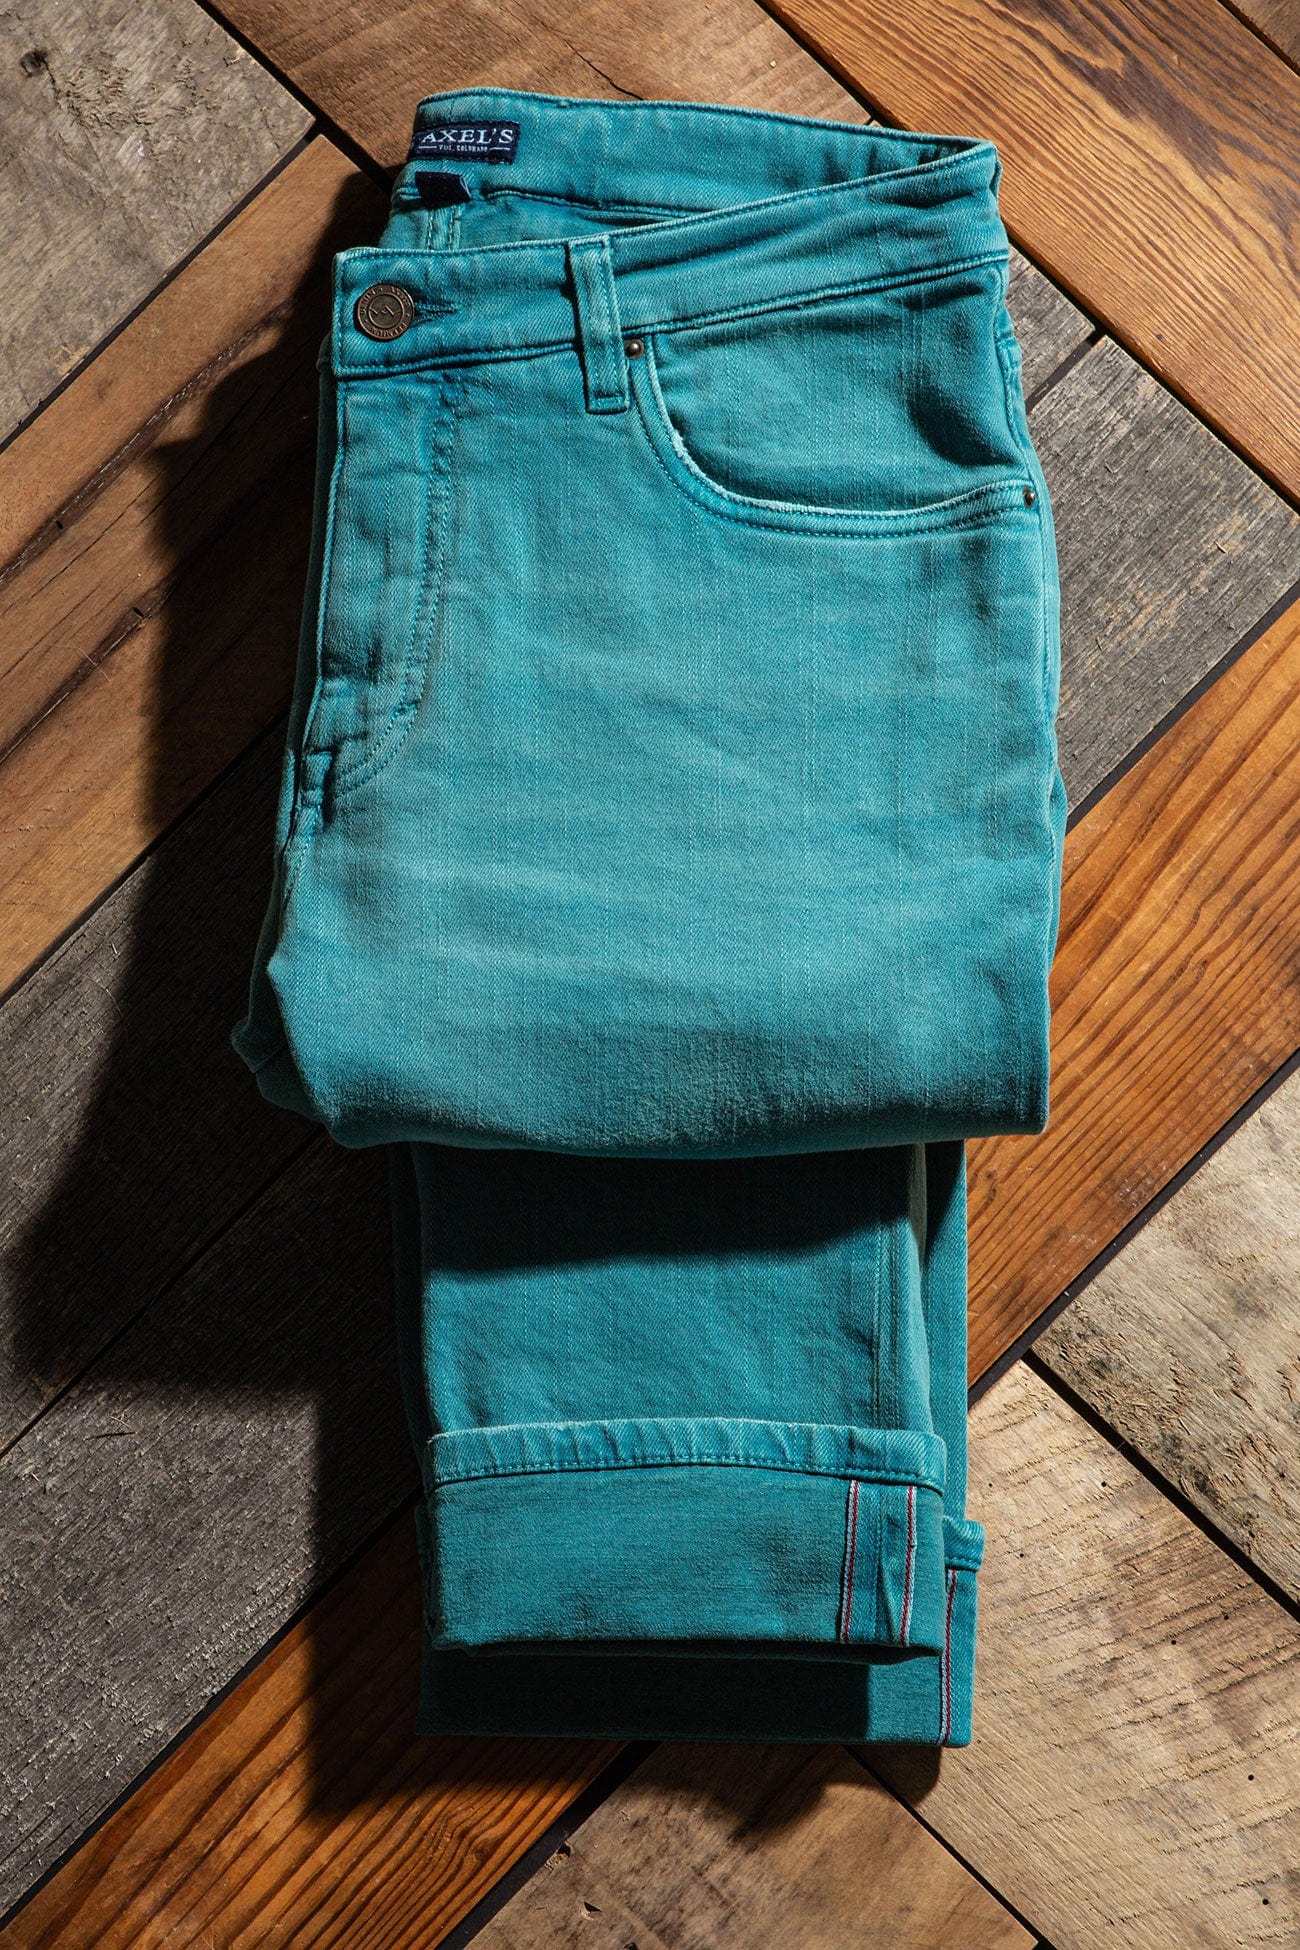 Axels Premium Denim Tucson Selvedge Denim In Biscay Bay Mens - Pants - 5 Pocket